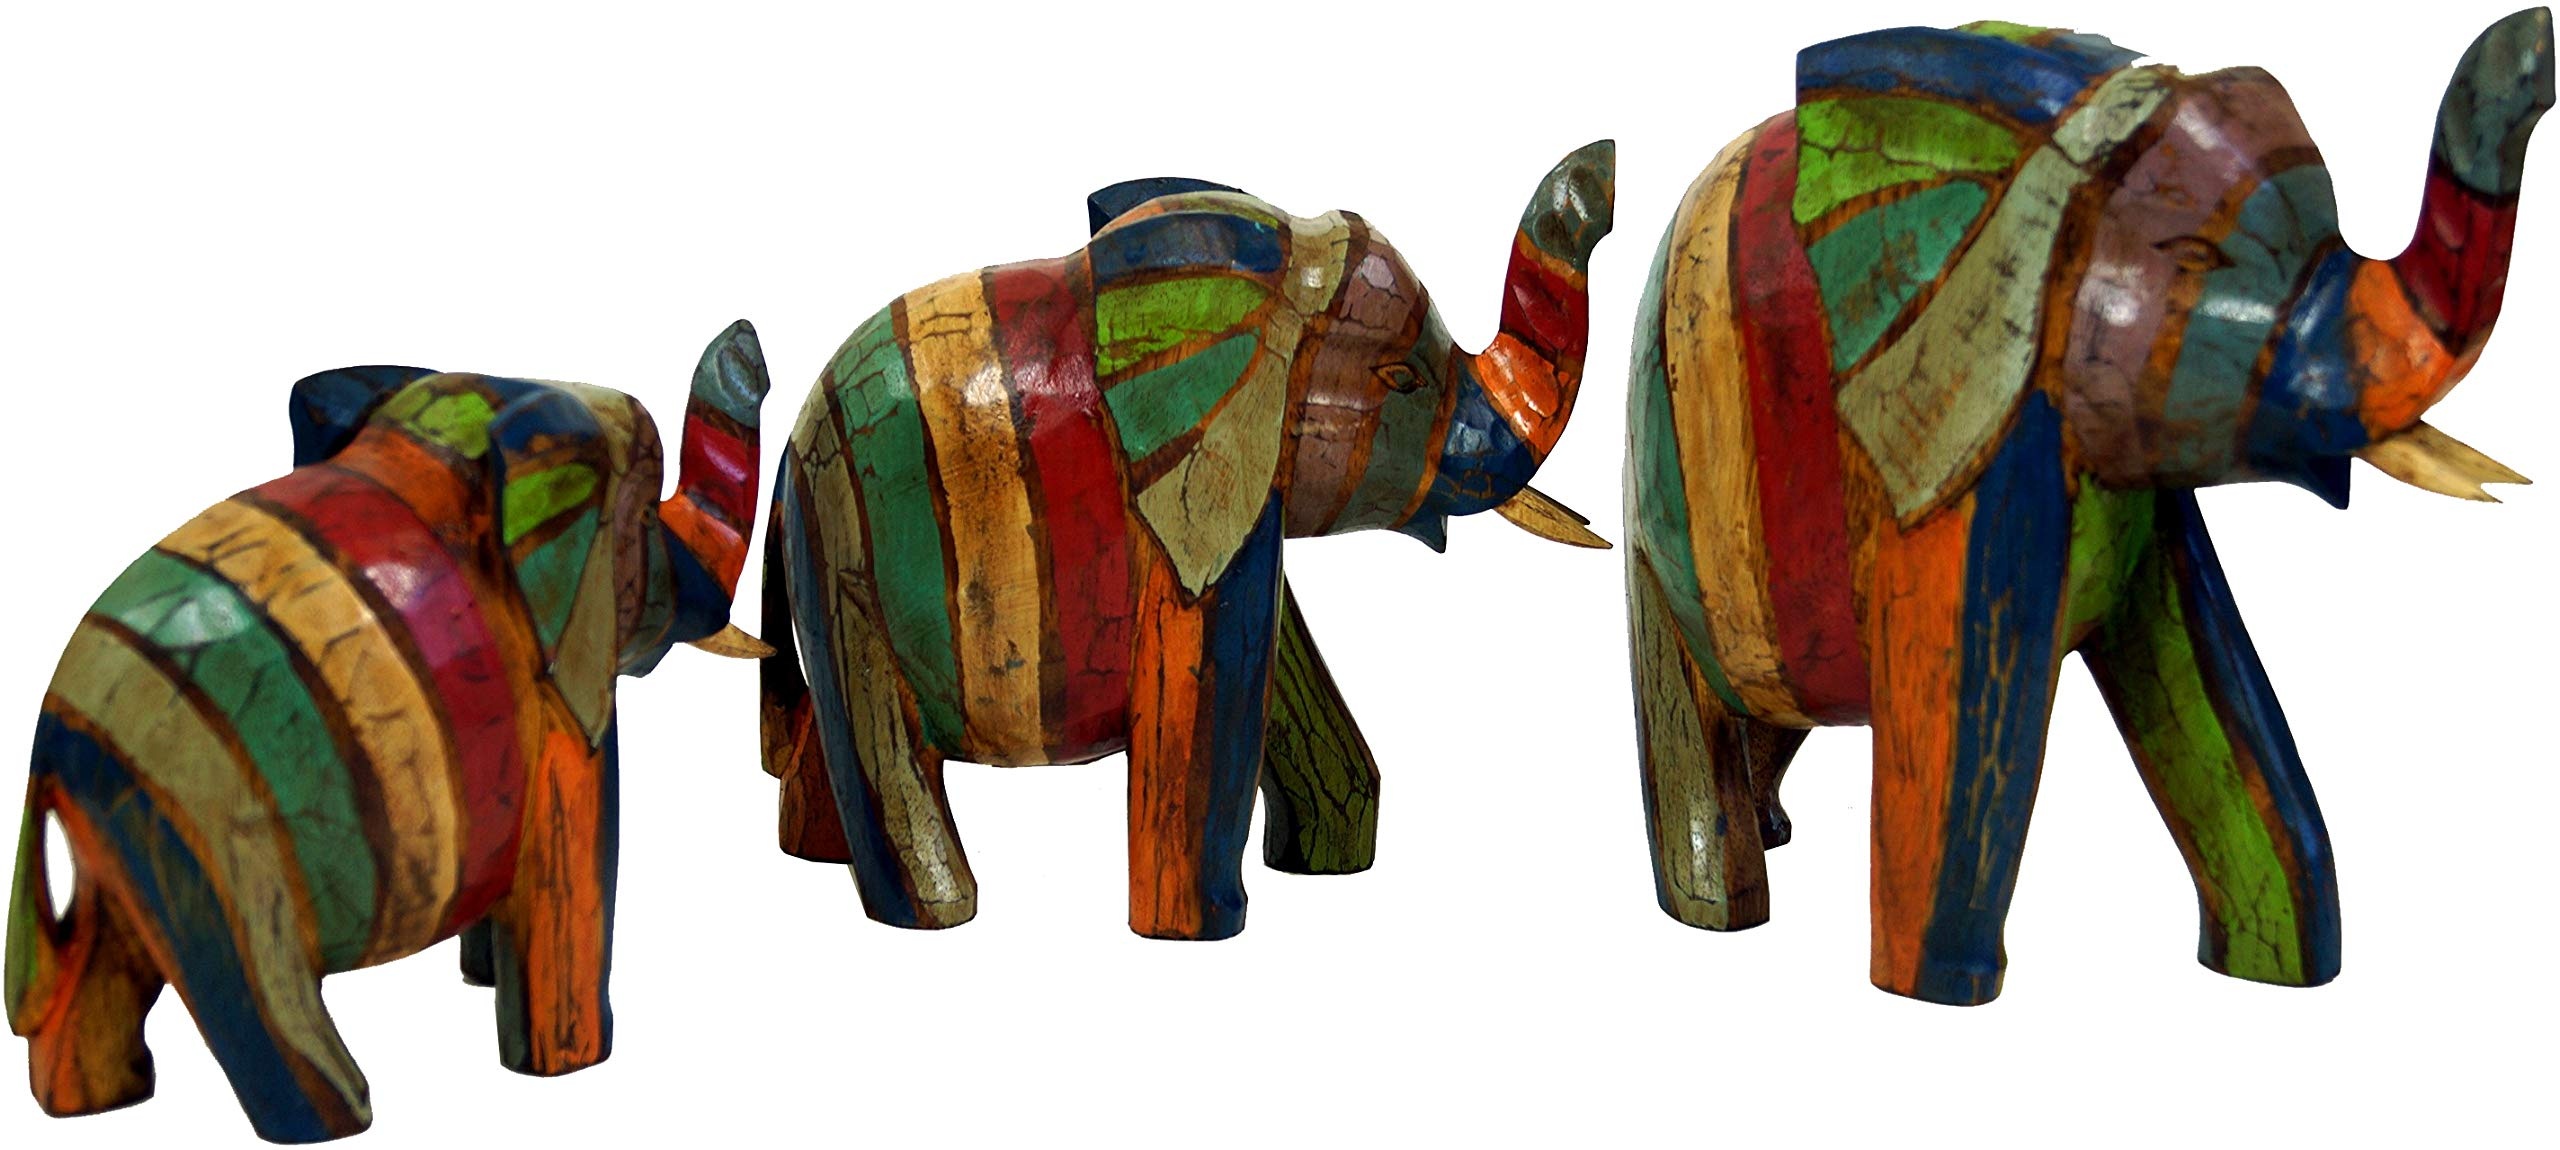 GURU SHOP Holzfigur Elefant in 3 Größen - Bunt Gestreift, Größe: Groß (24x25x9 cm), Tierfiguren